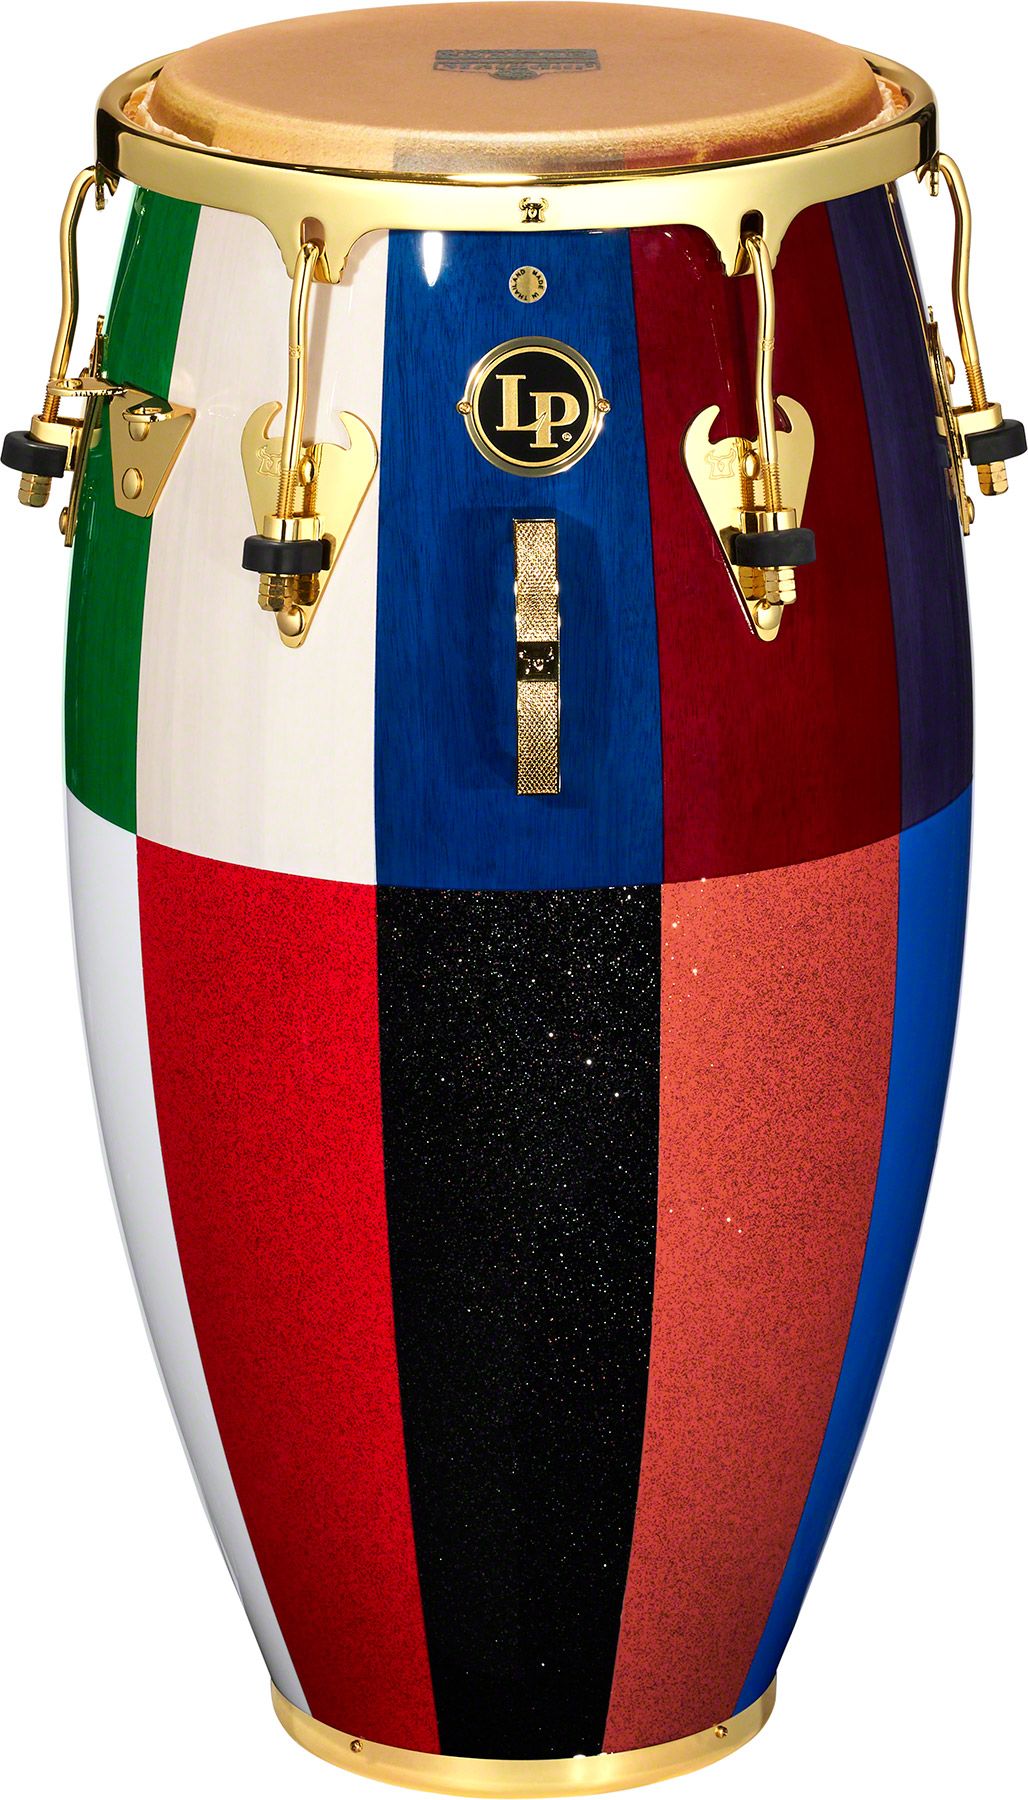 latin percussion logo